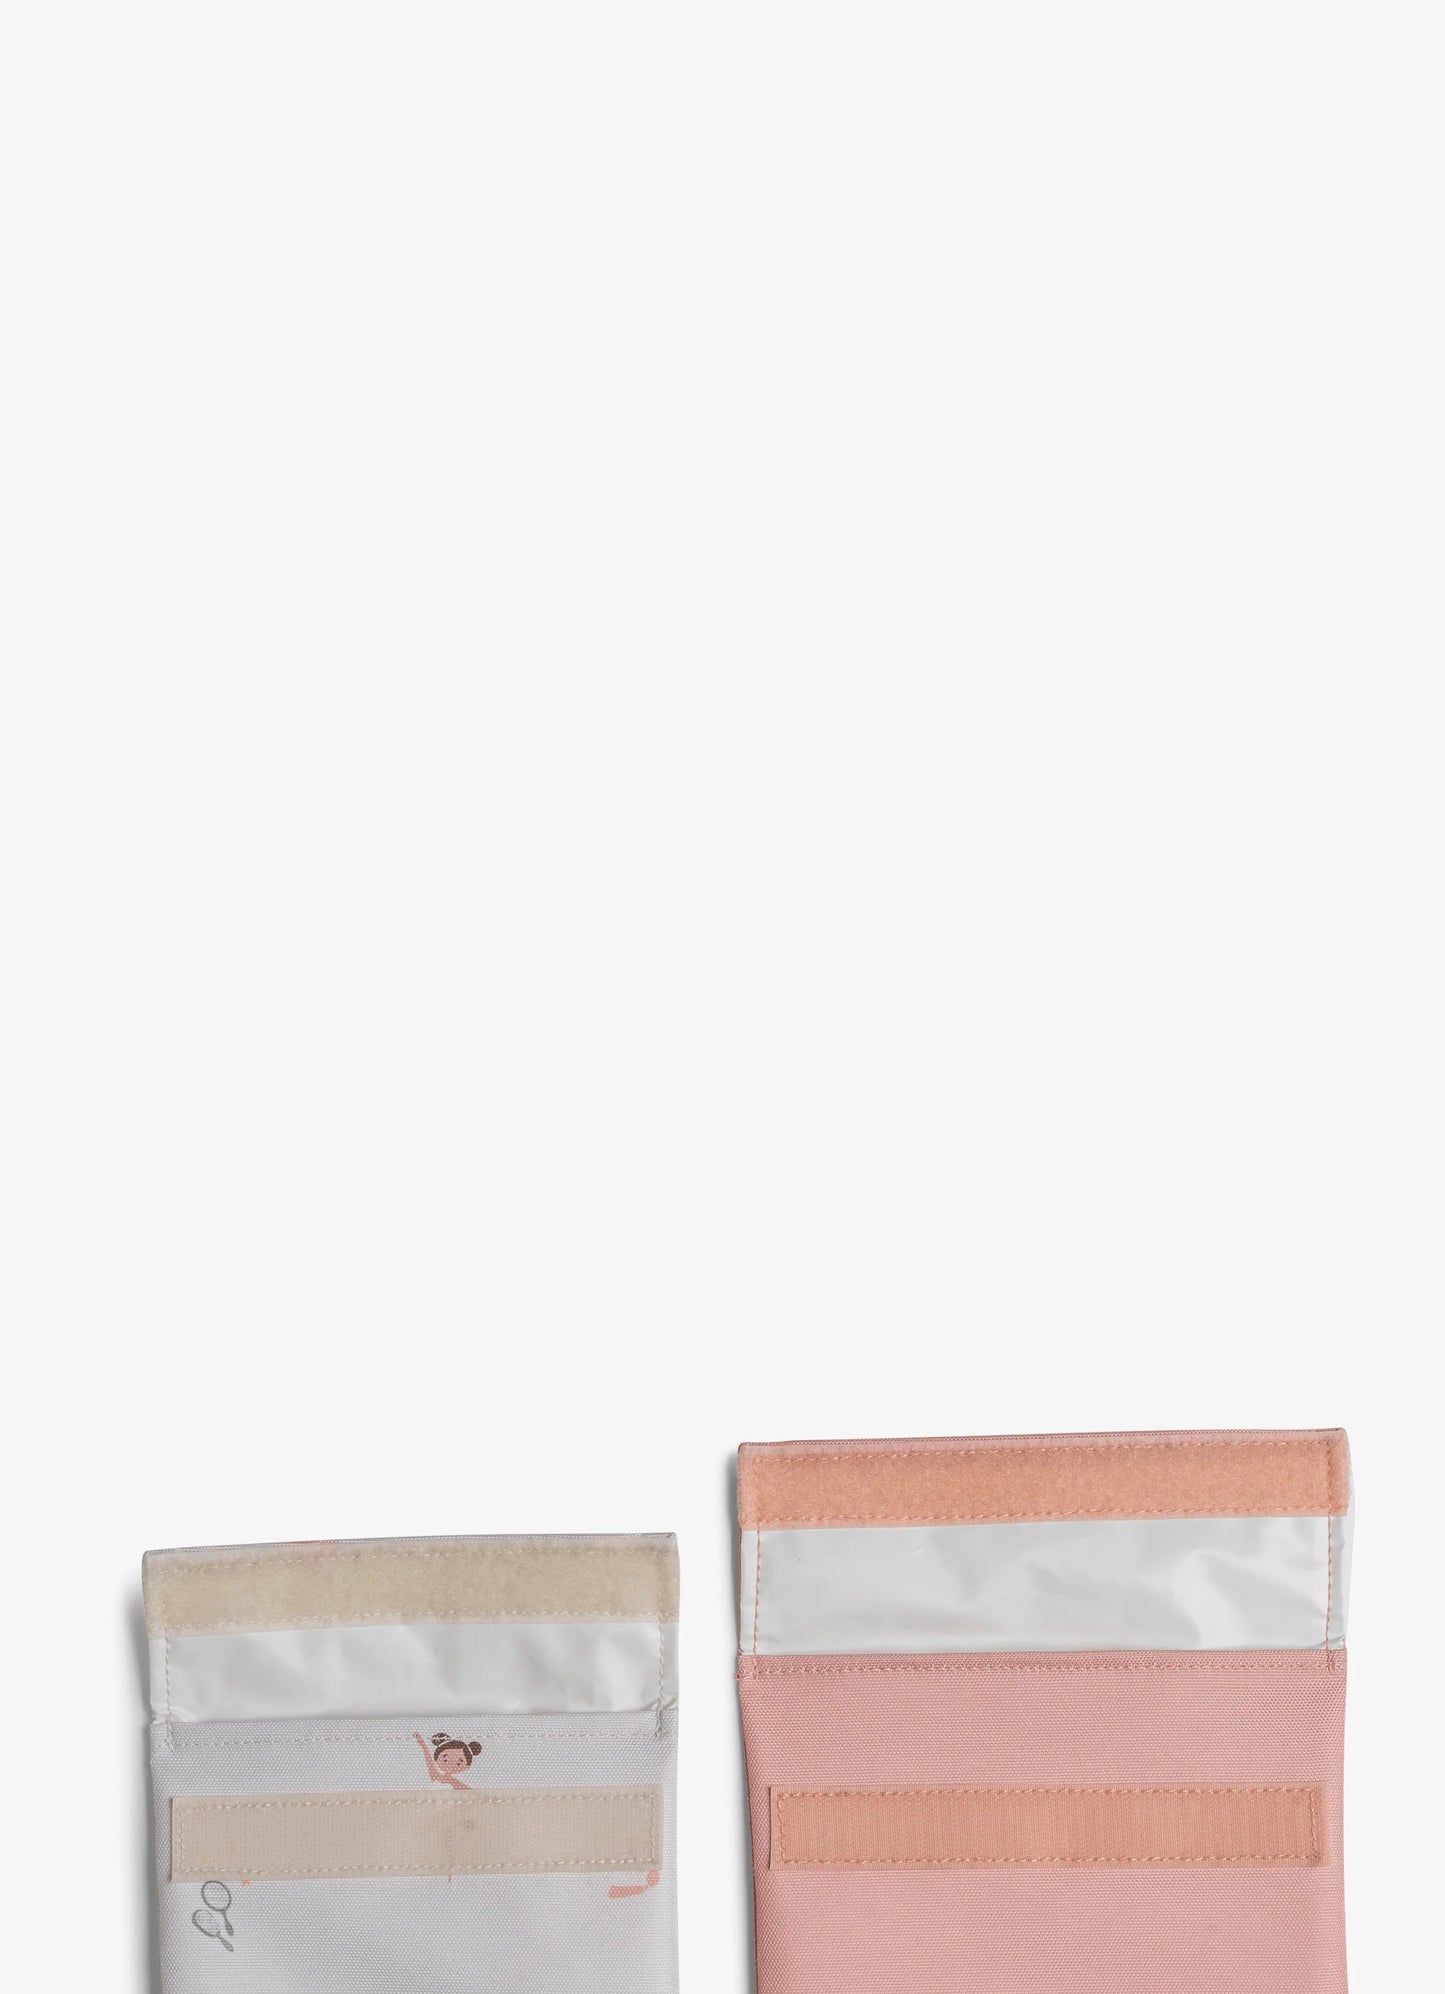 Two Reusable Sandwich Bags - Ballerina/Blush Pink